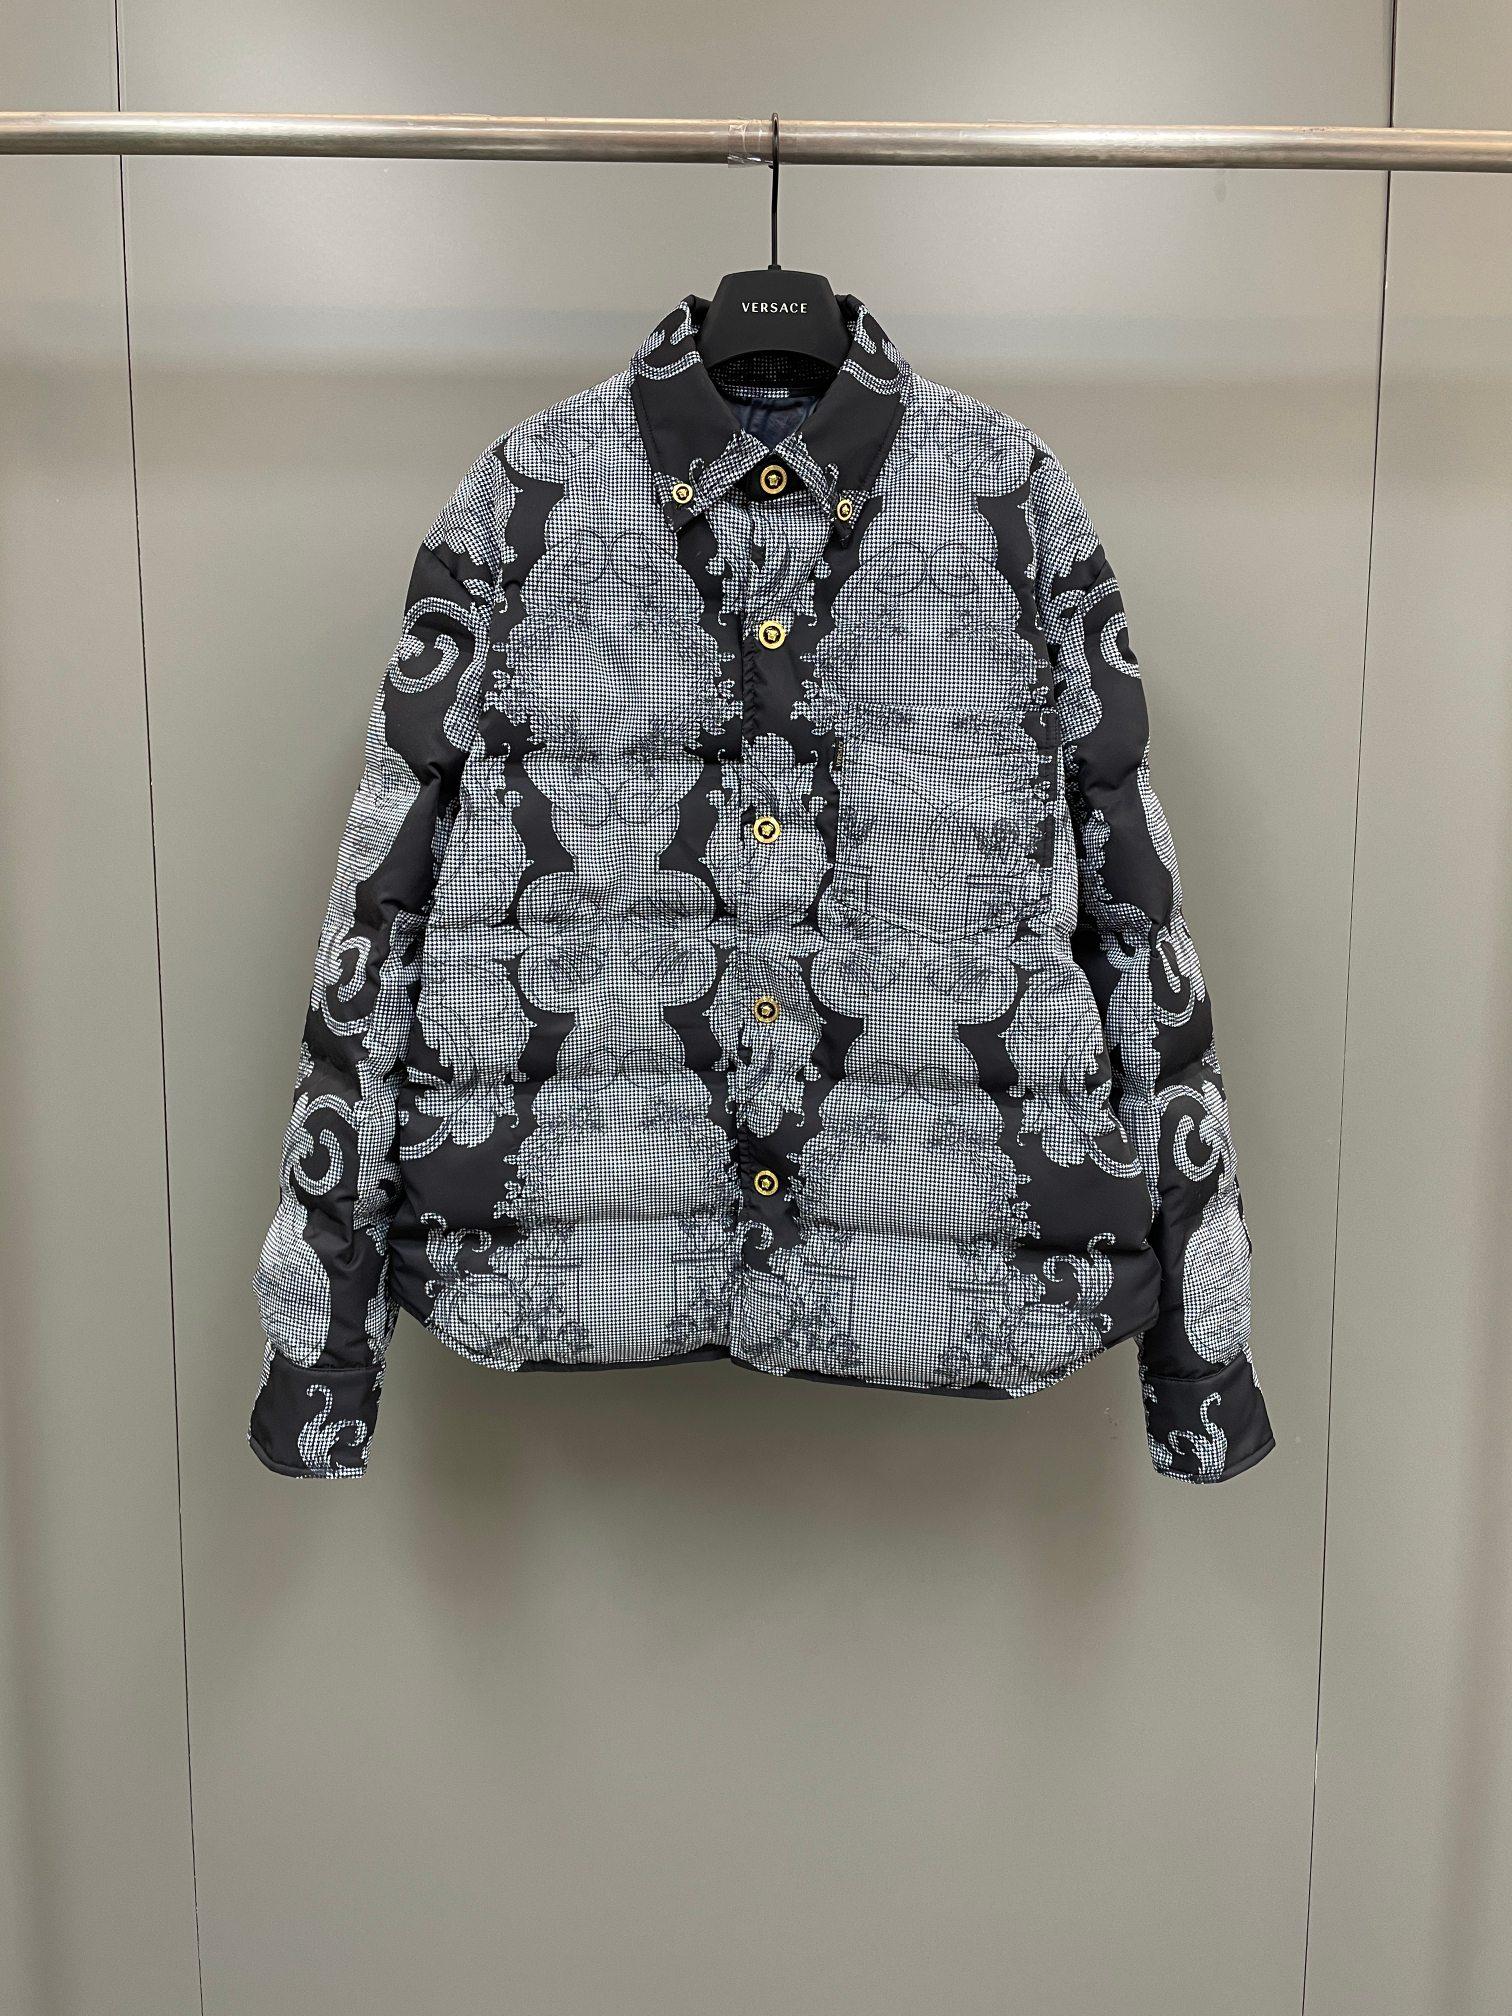 silver-baroque-blouson-puffer-jacket-5661_16844017302-1000